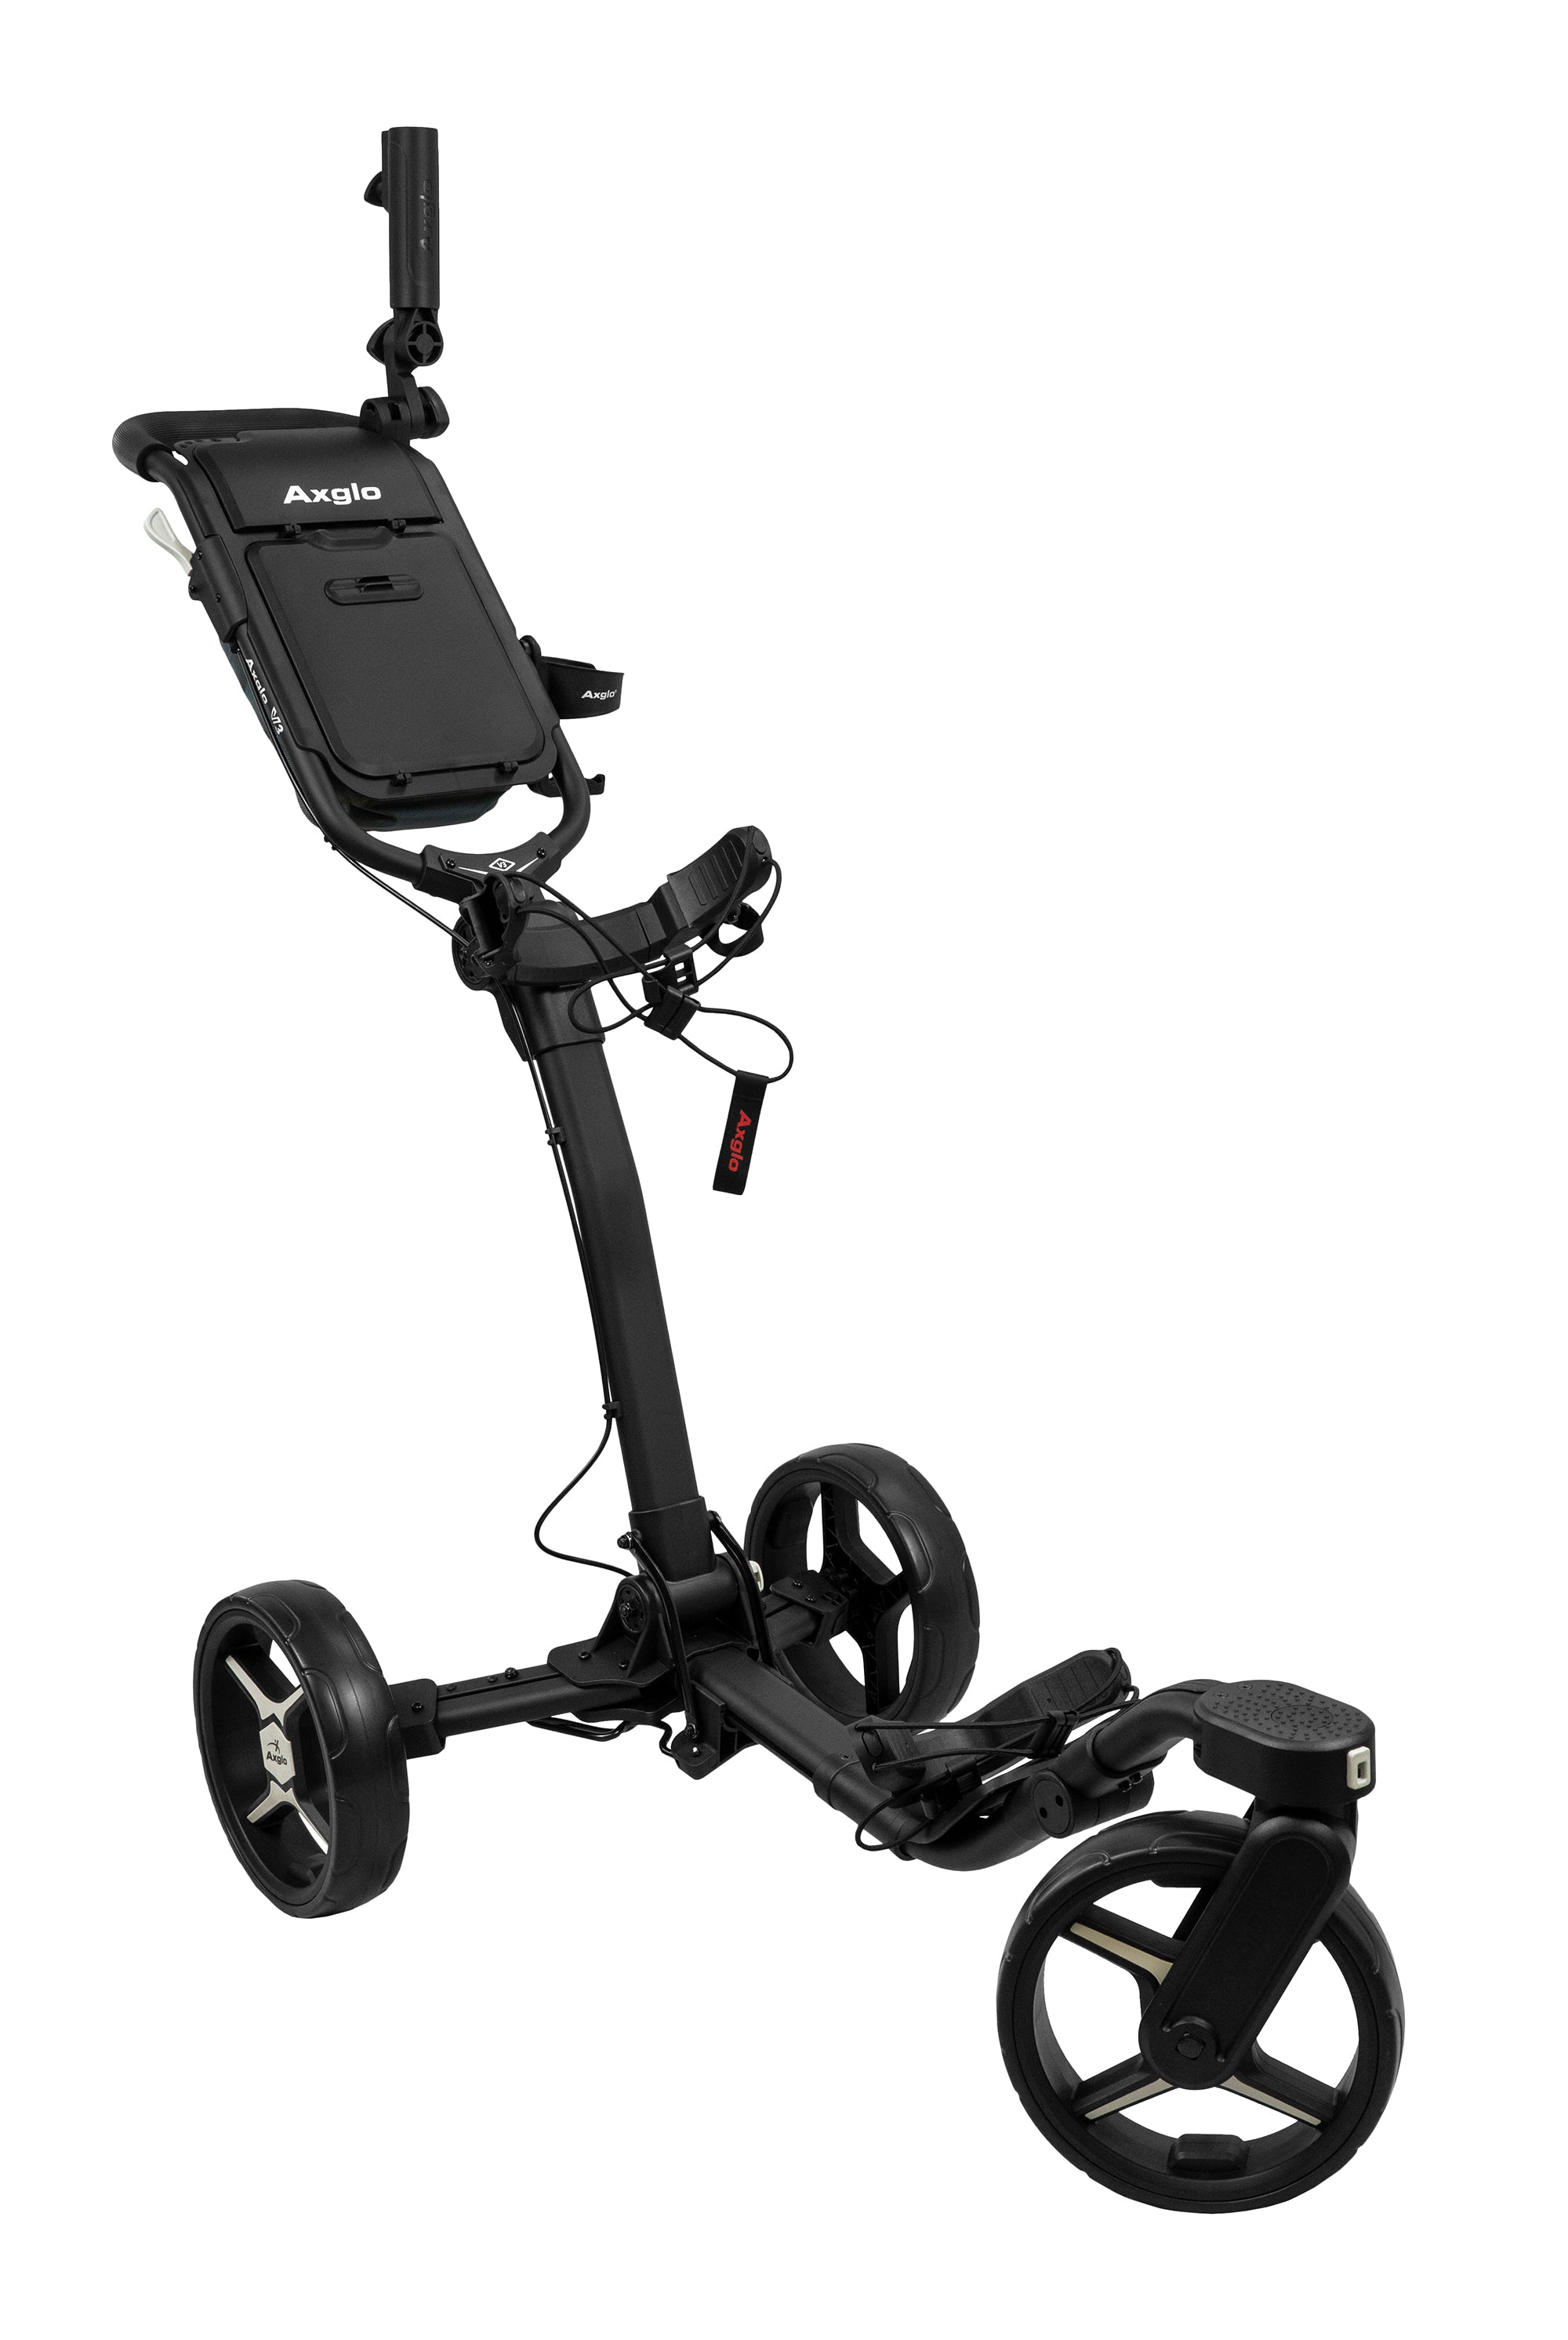 Axglo V3 Golf Push Cart (black/grey)